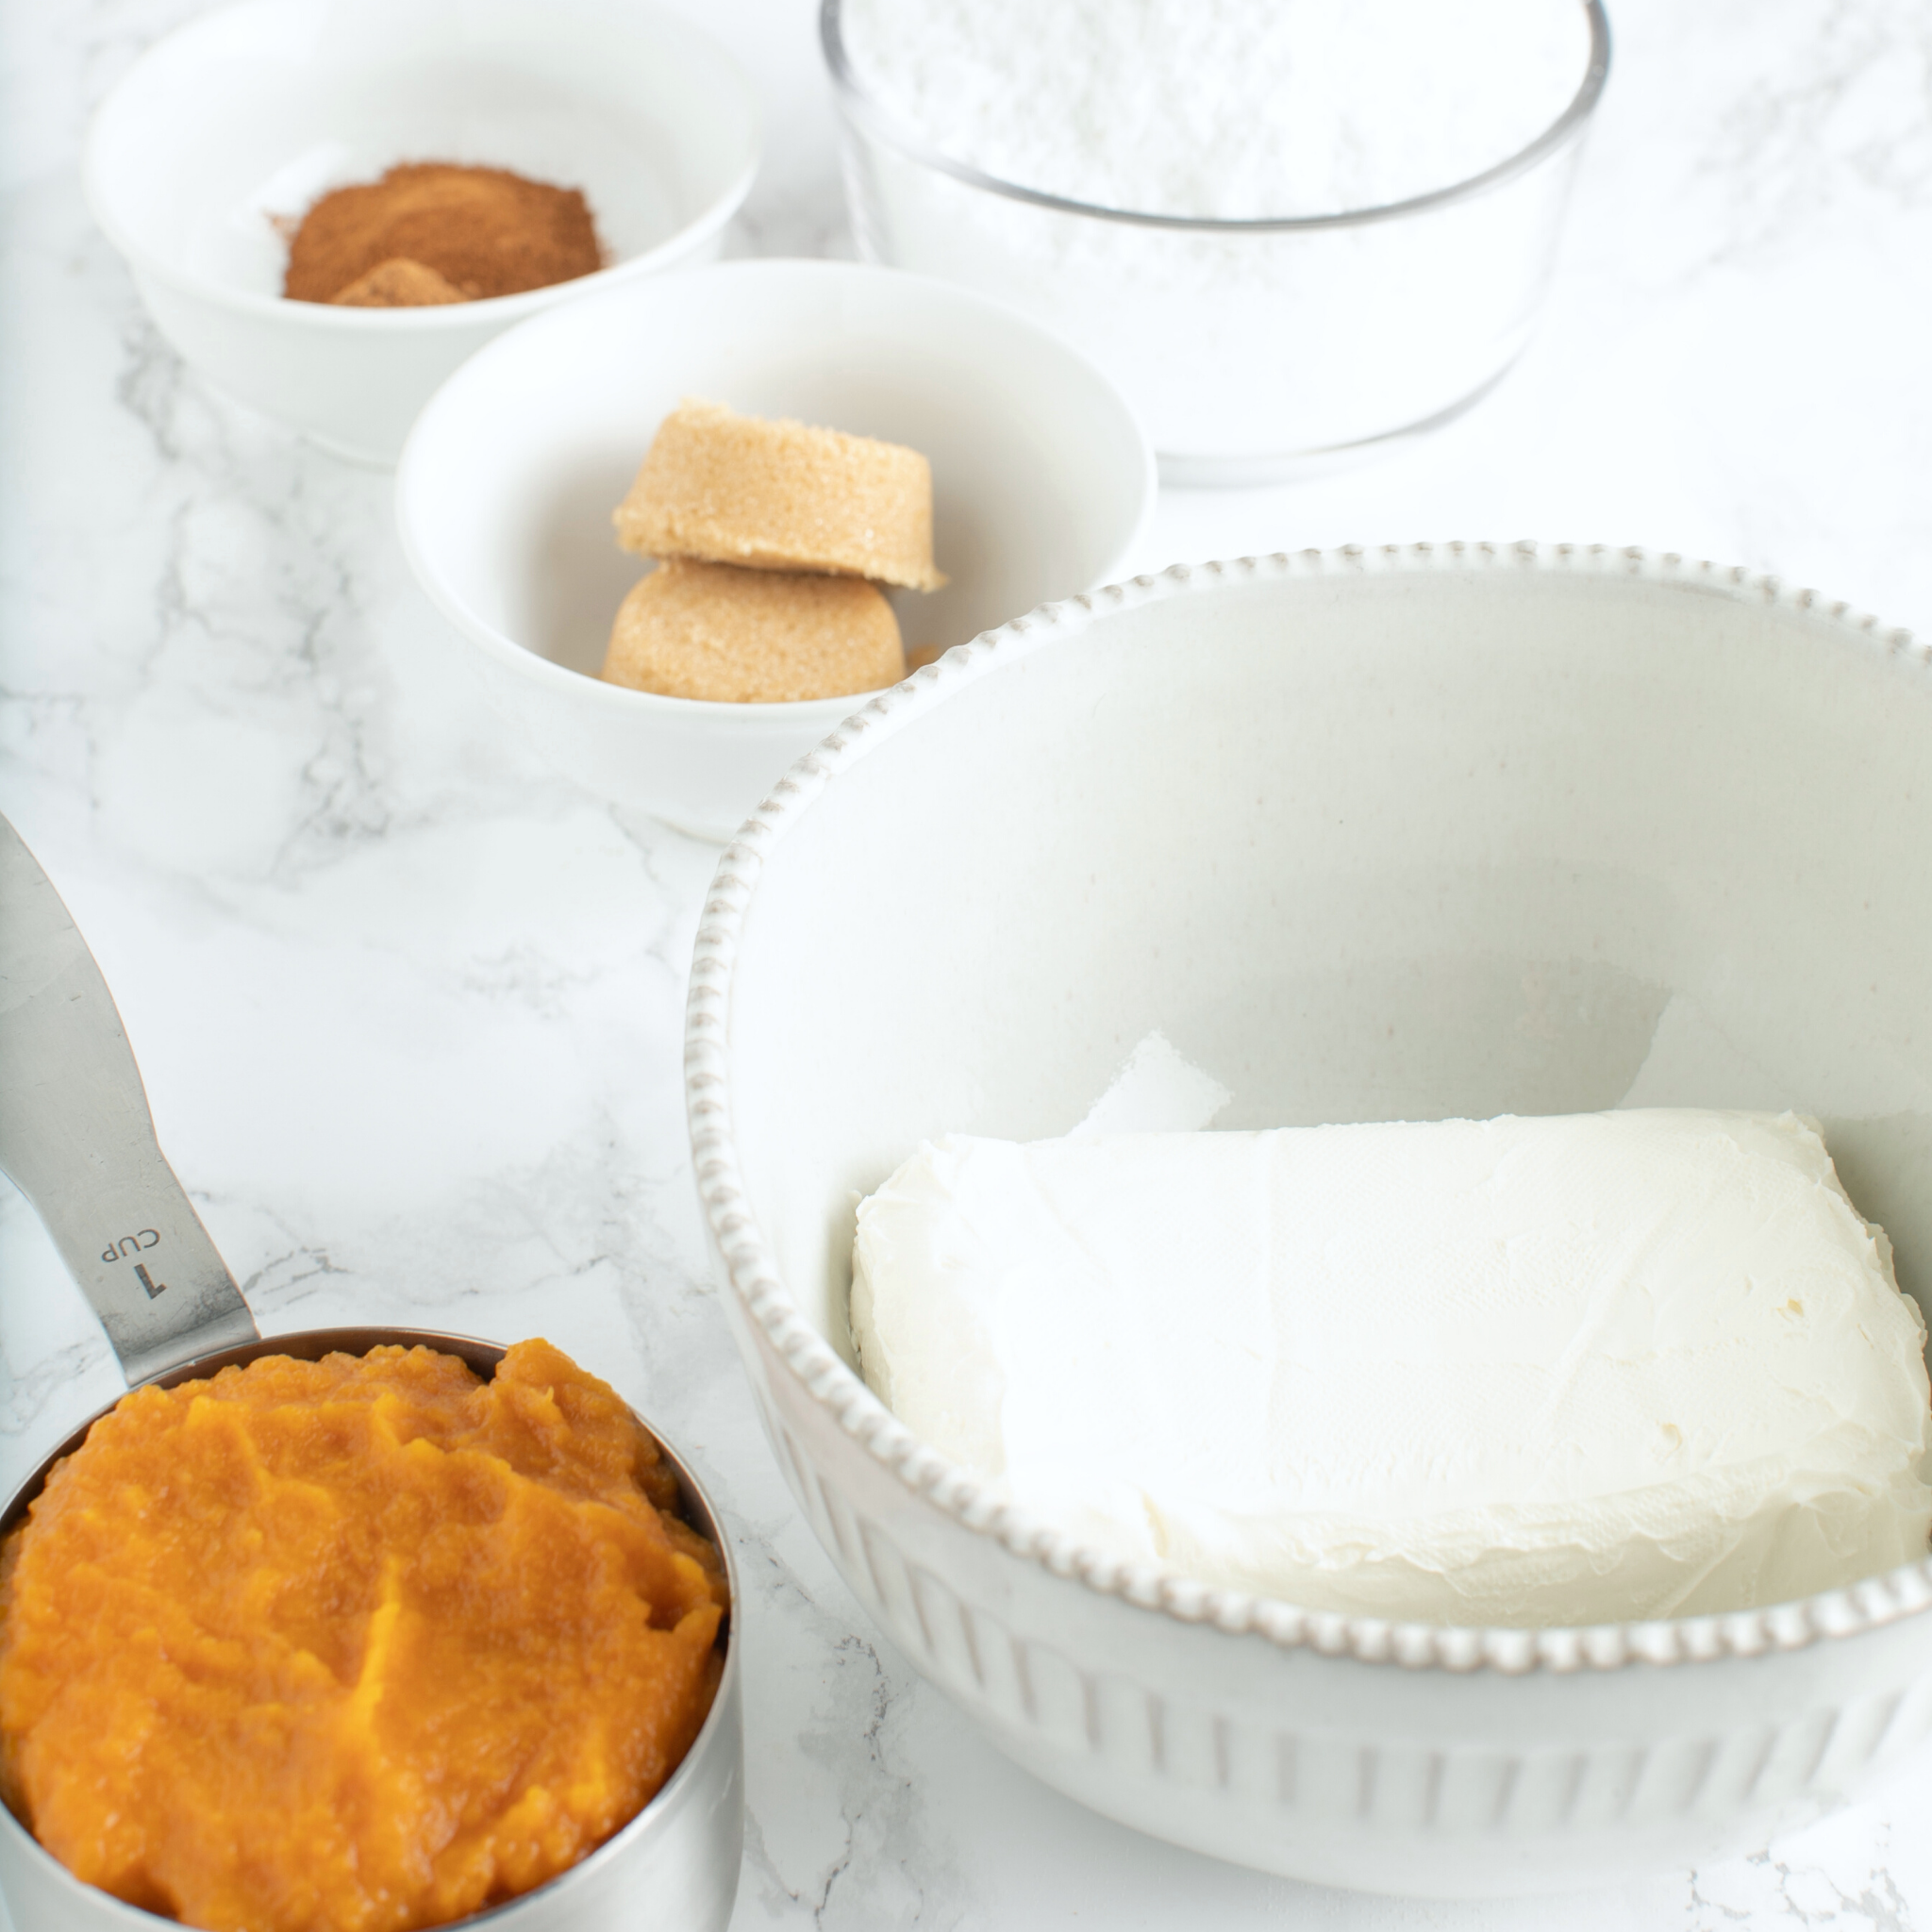 Ingredients for Pumpkin Cream Cheese Dip